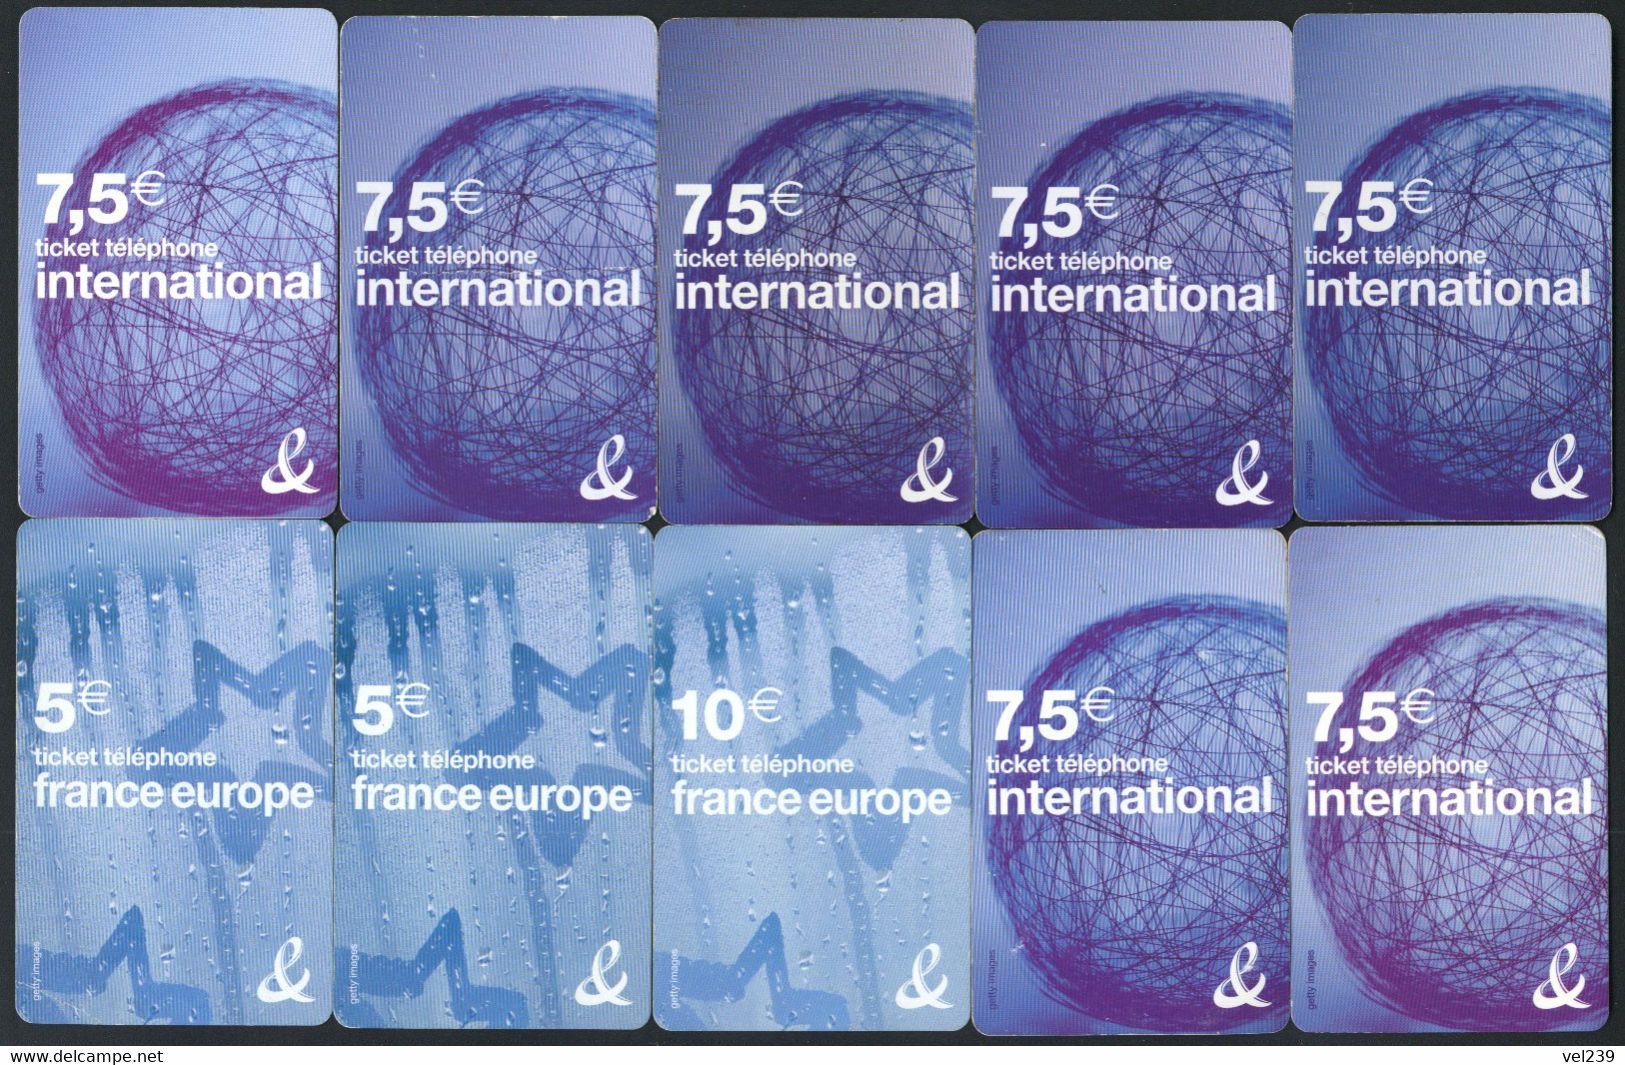 France. Europe. International - Tickets FT